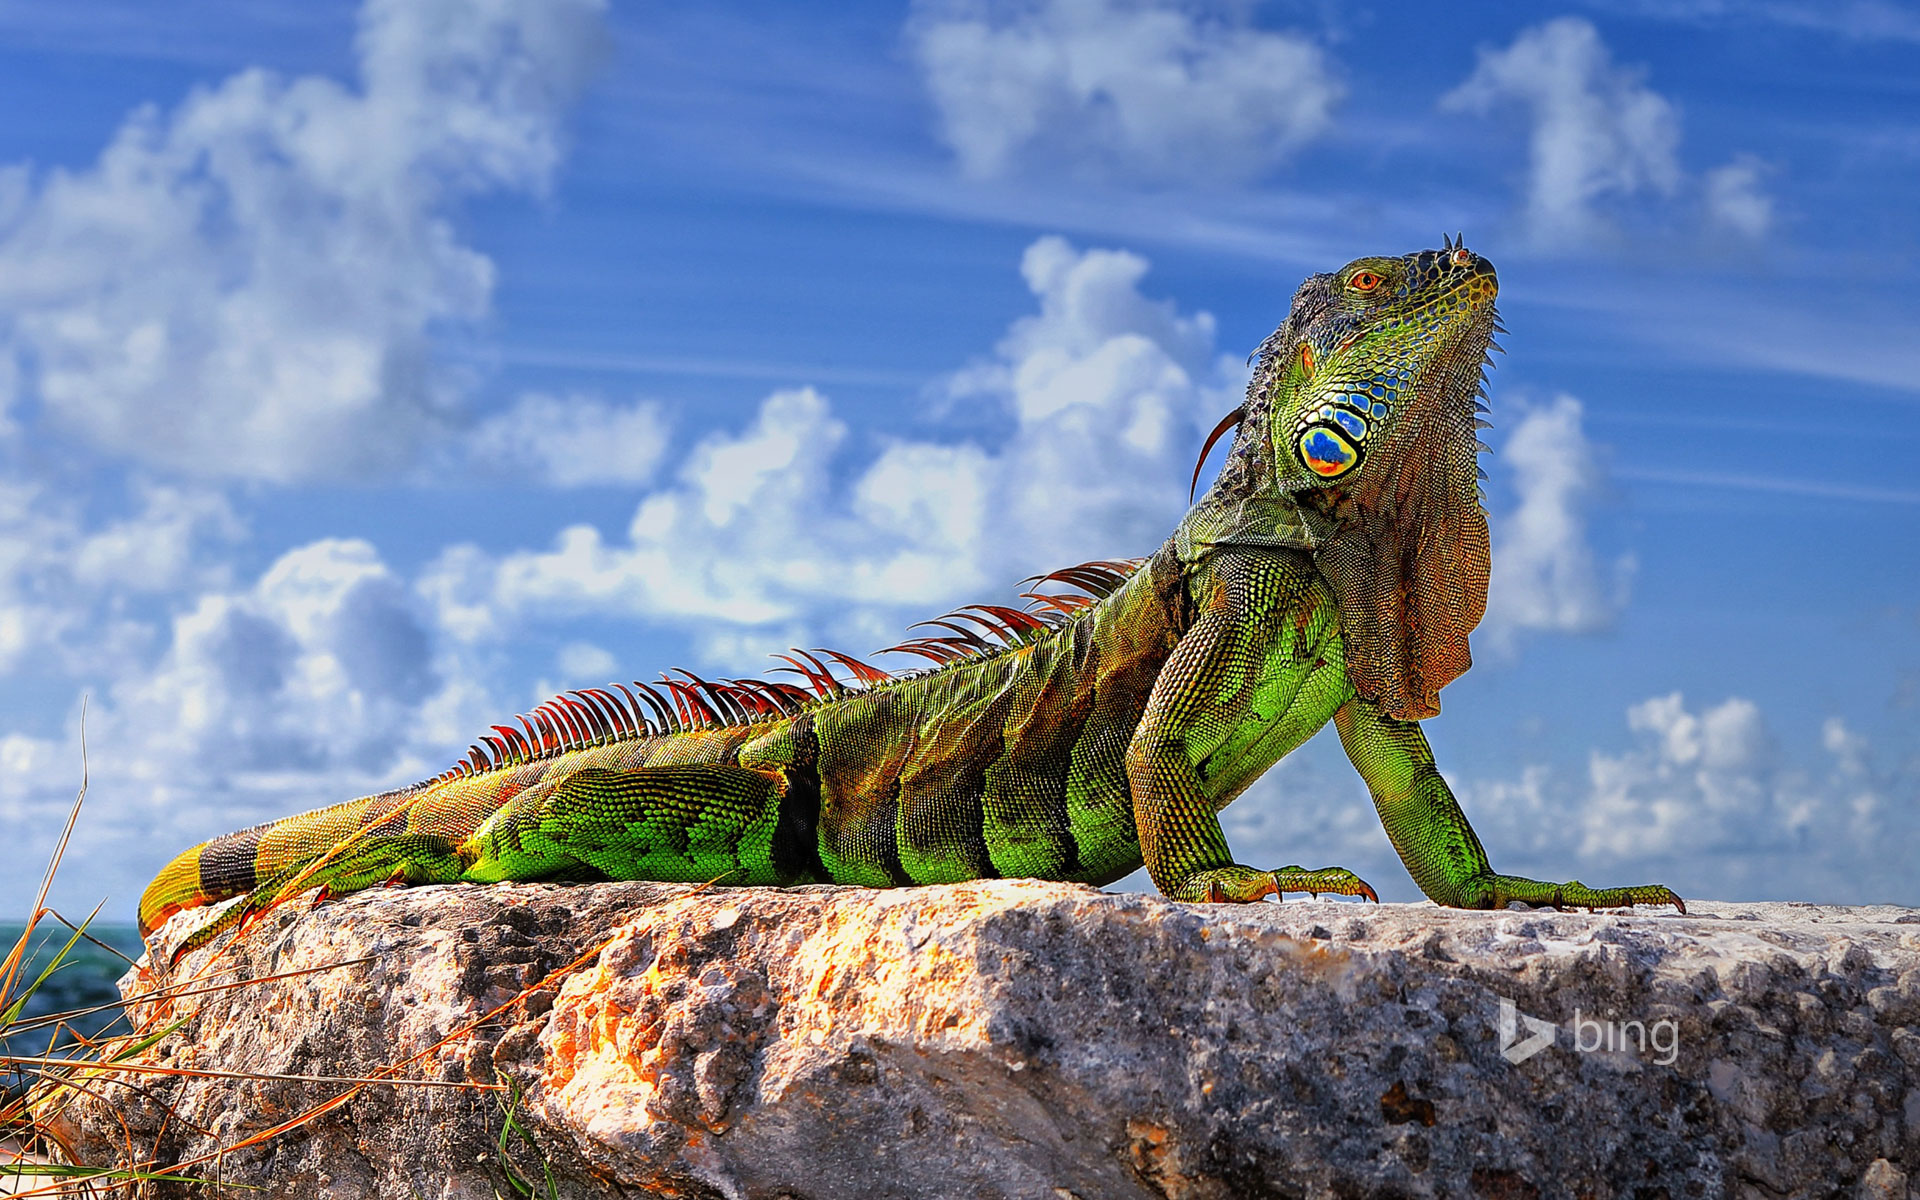 Common iguana in the Florida Keys